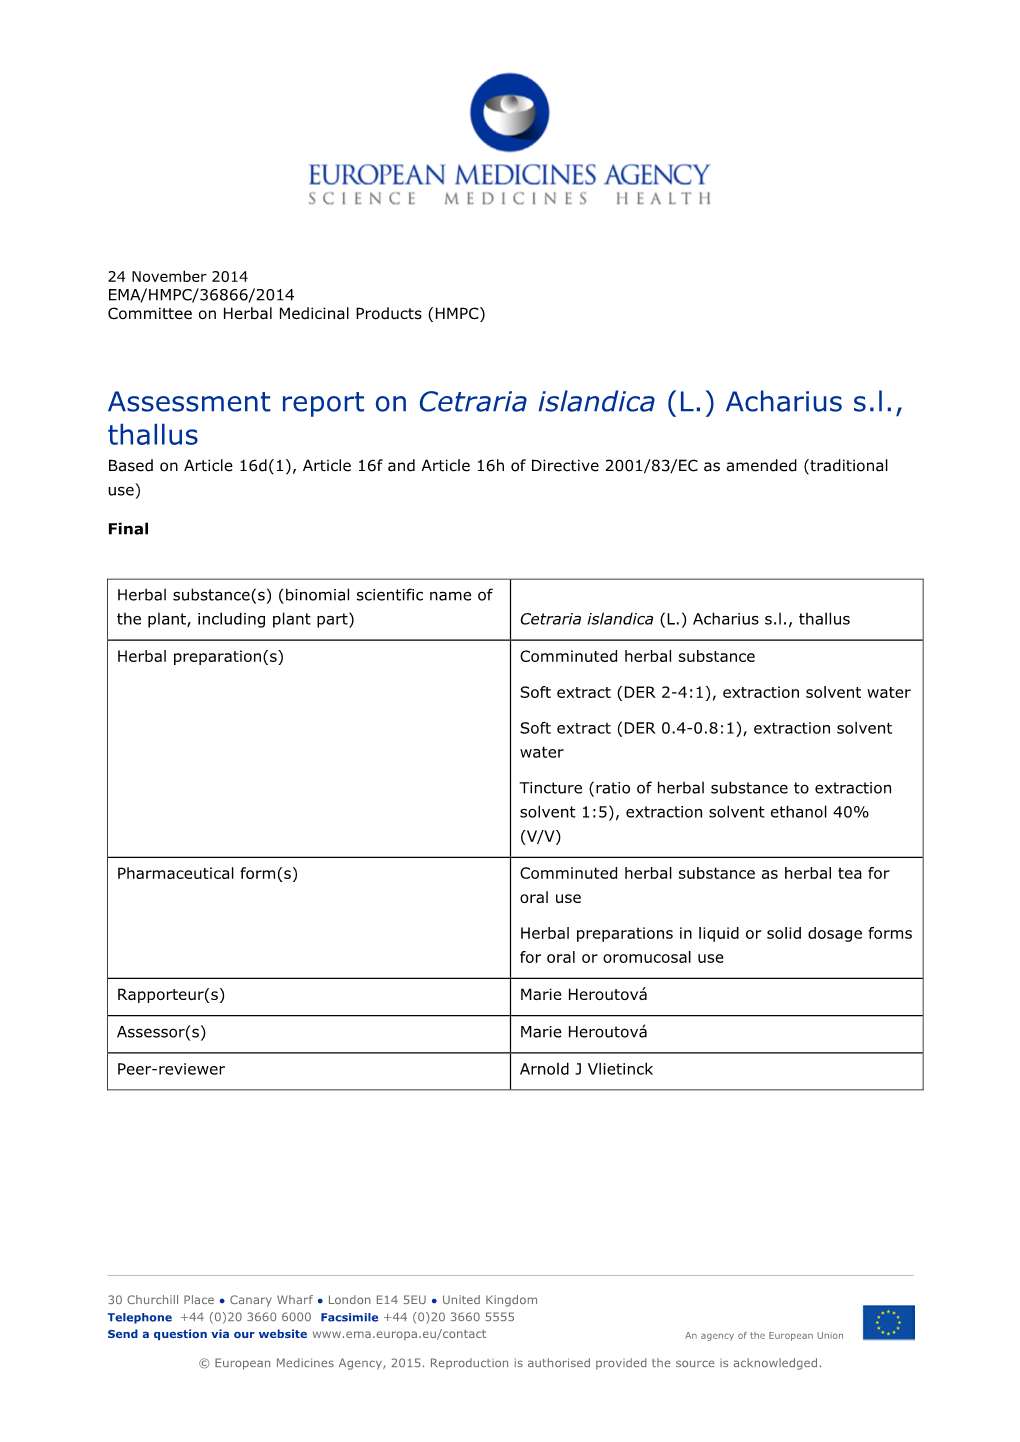 Assessment Report on Cetraria Islandica